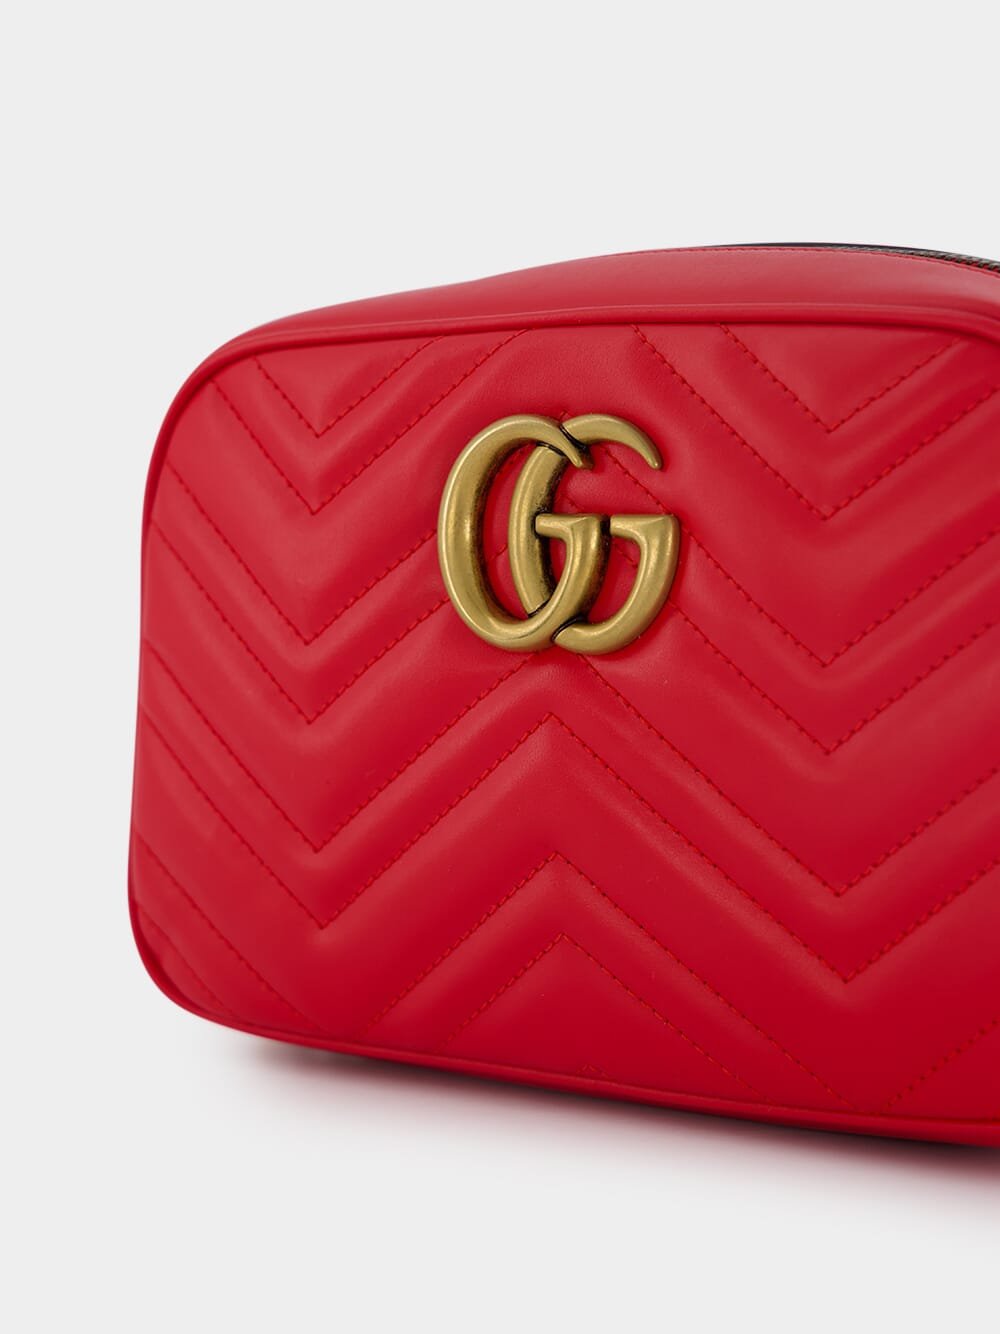 GucciGg Marmont Matelassé Small Shoulder Bag at Fashion Clinic